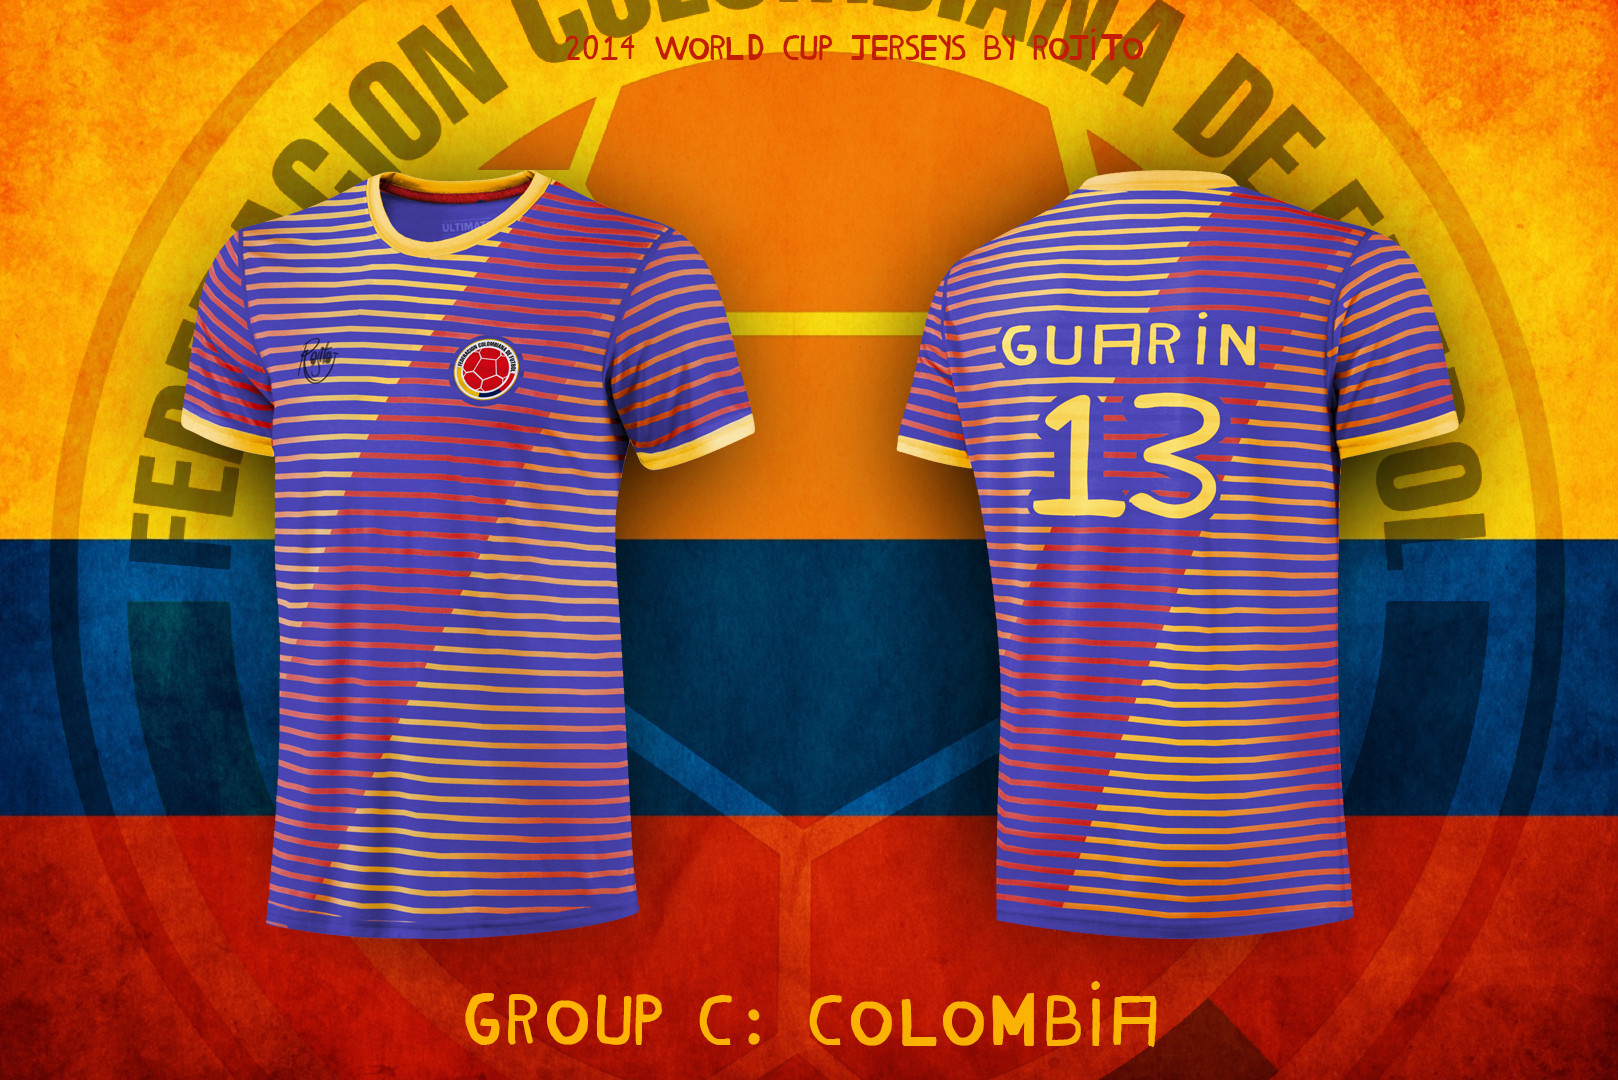 Maillot de foot custom mondial 2014 colombie